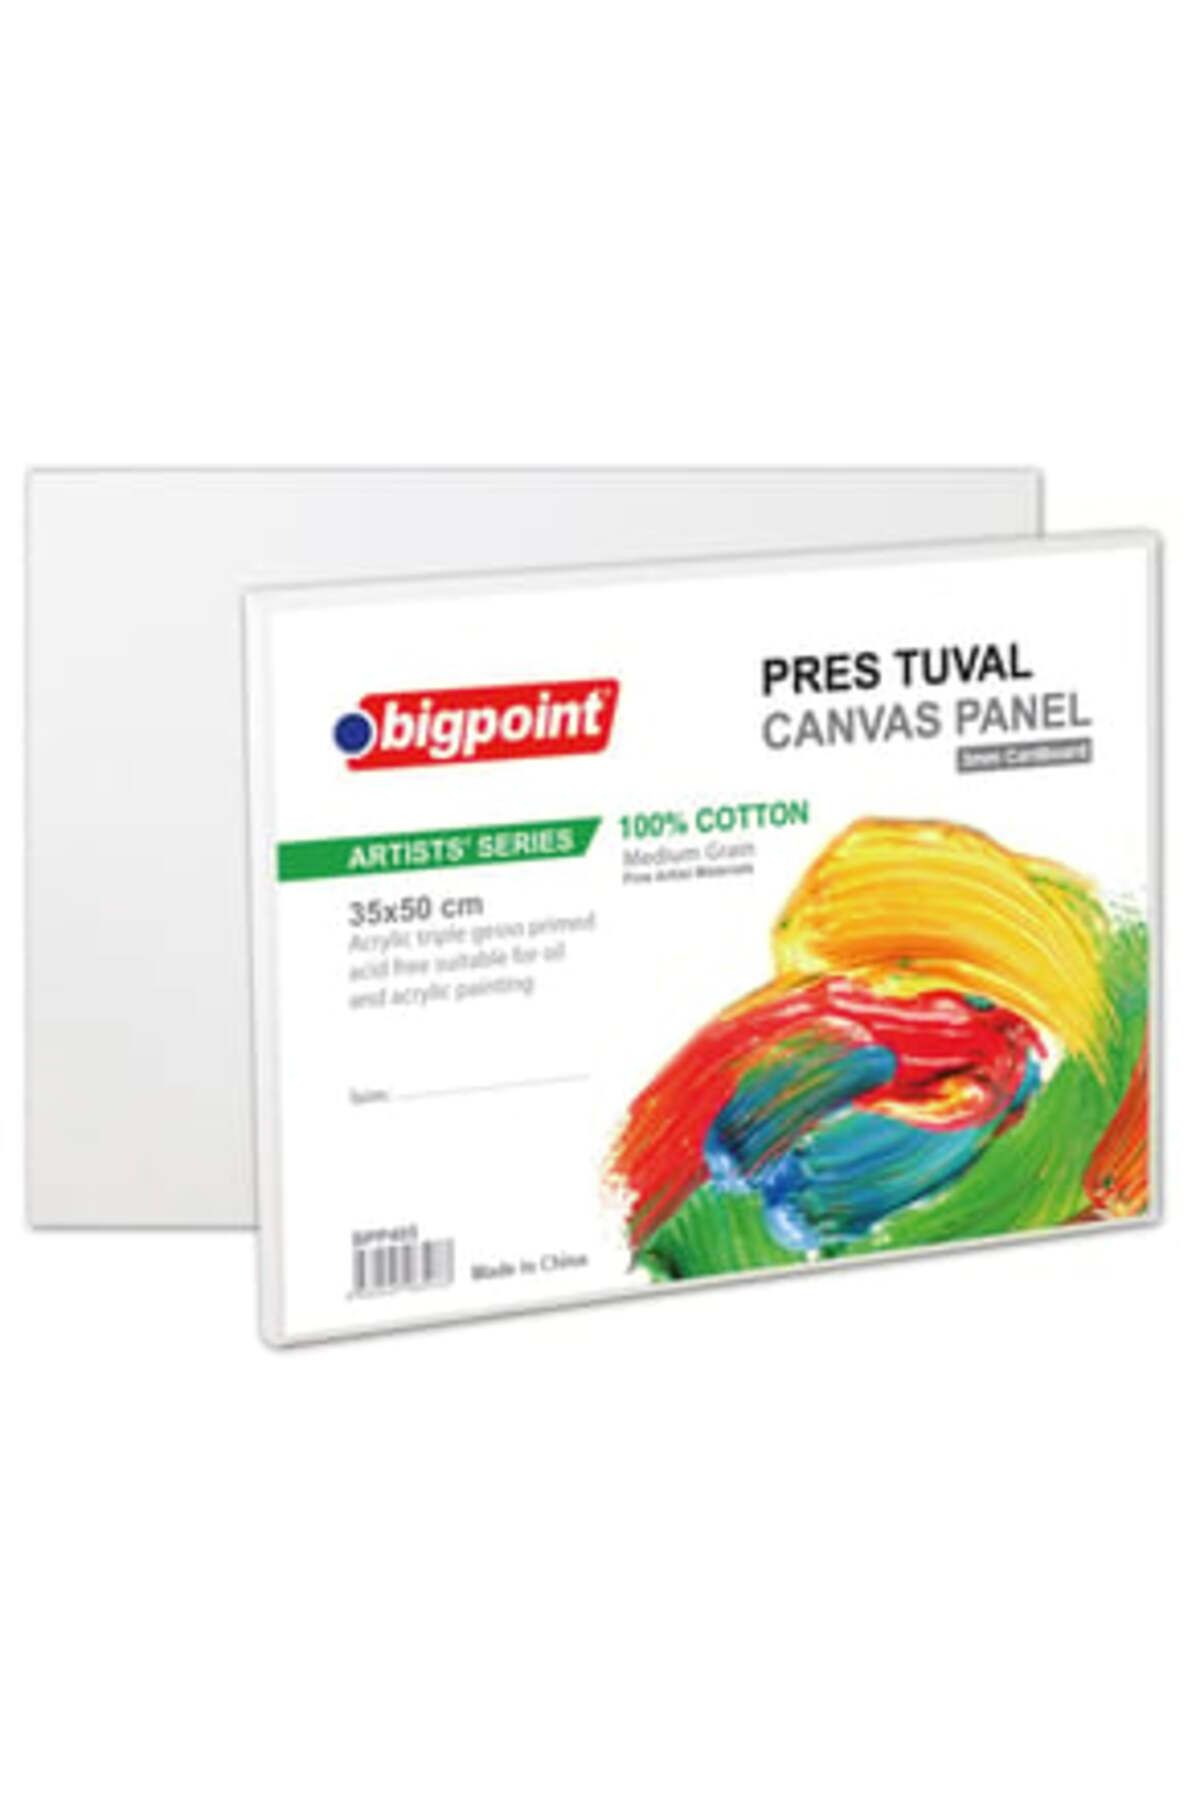 Bigpoint ( KALEMTIRAŞ HEDİYE ) Bigpoint Artists' Pres Tuval 35x50cm ( 2 ADET )